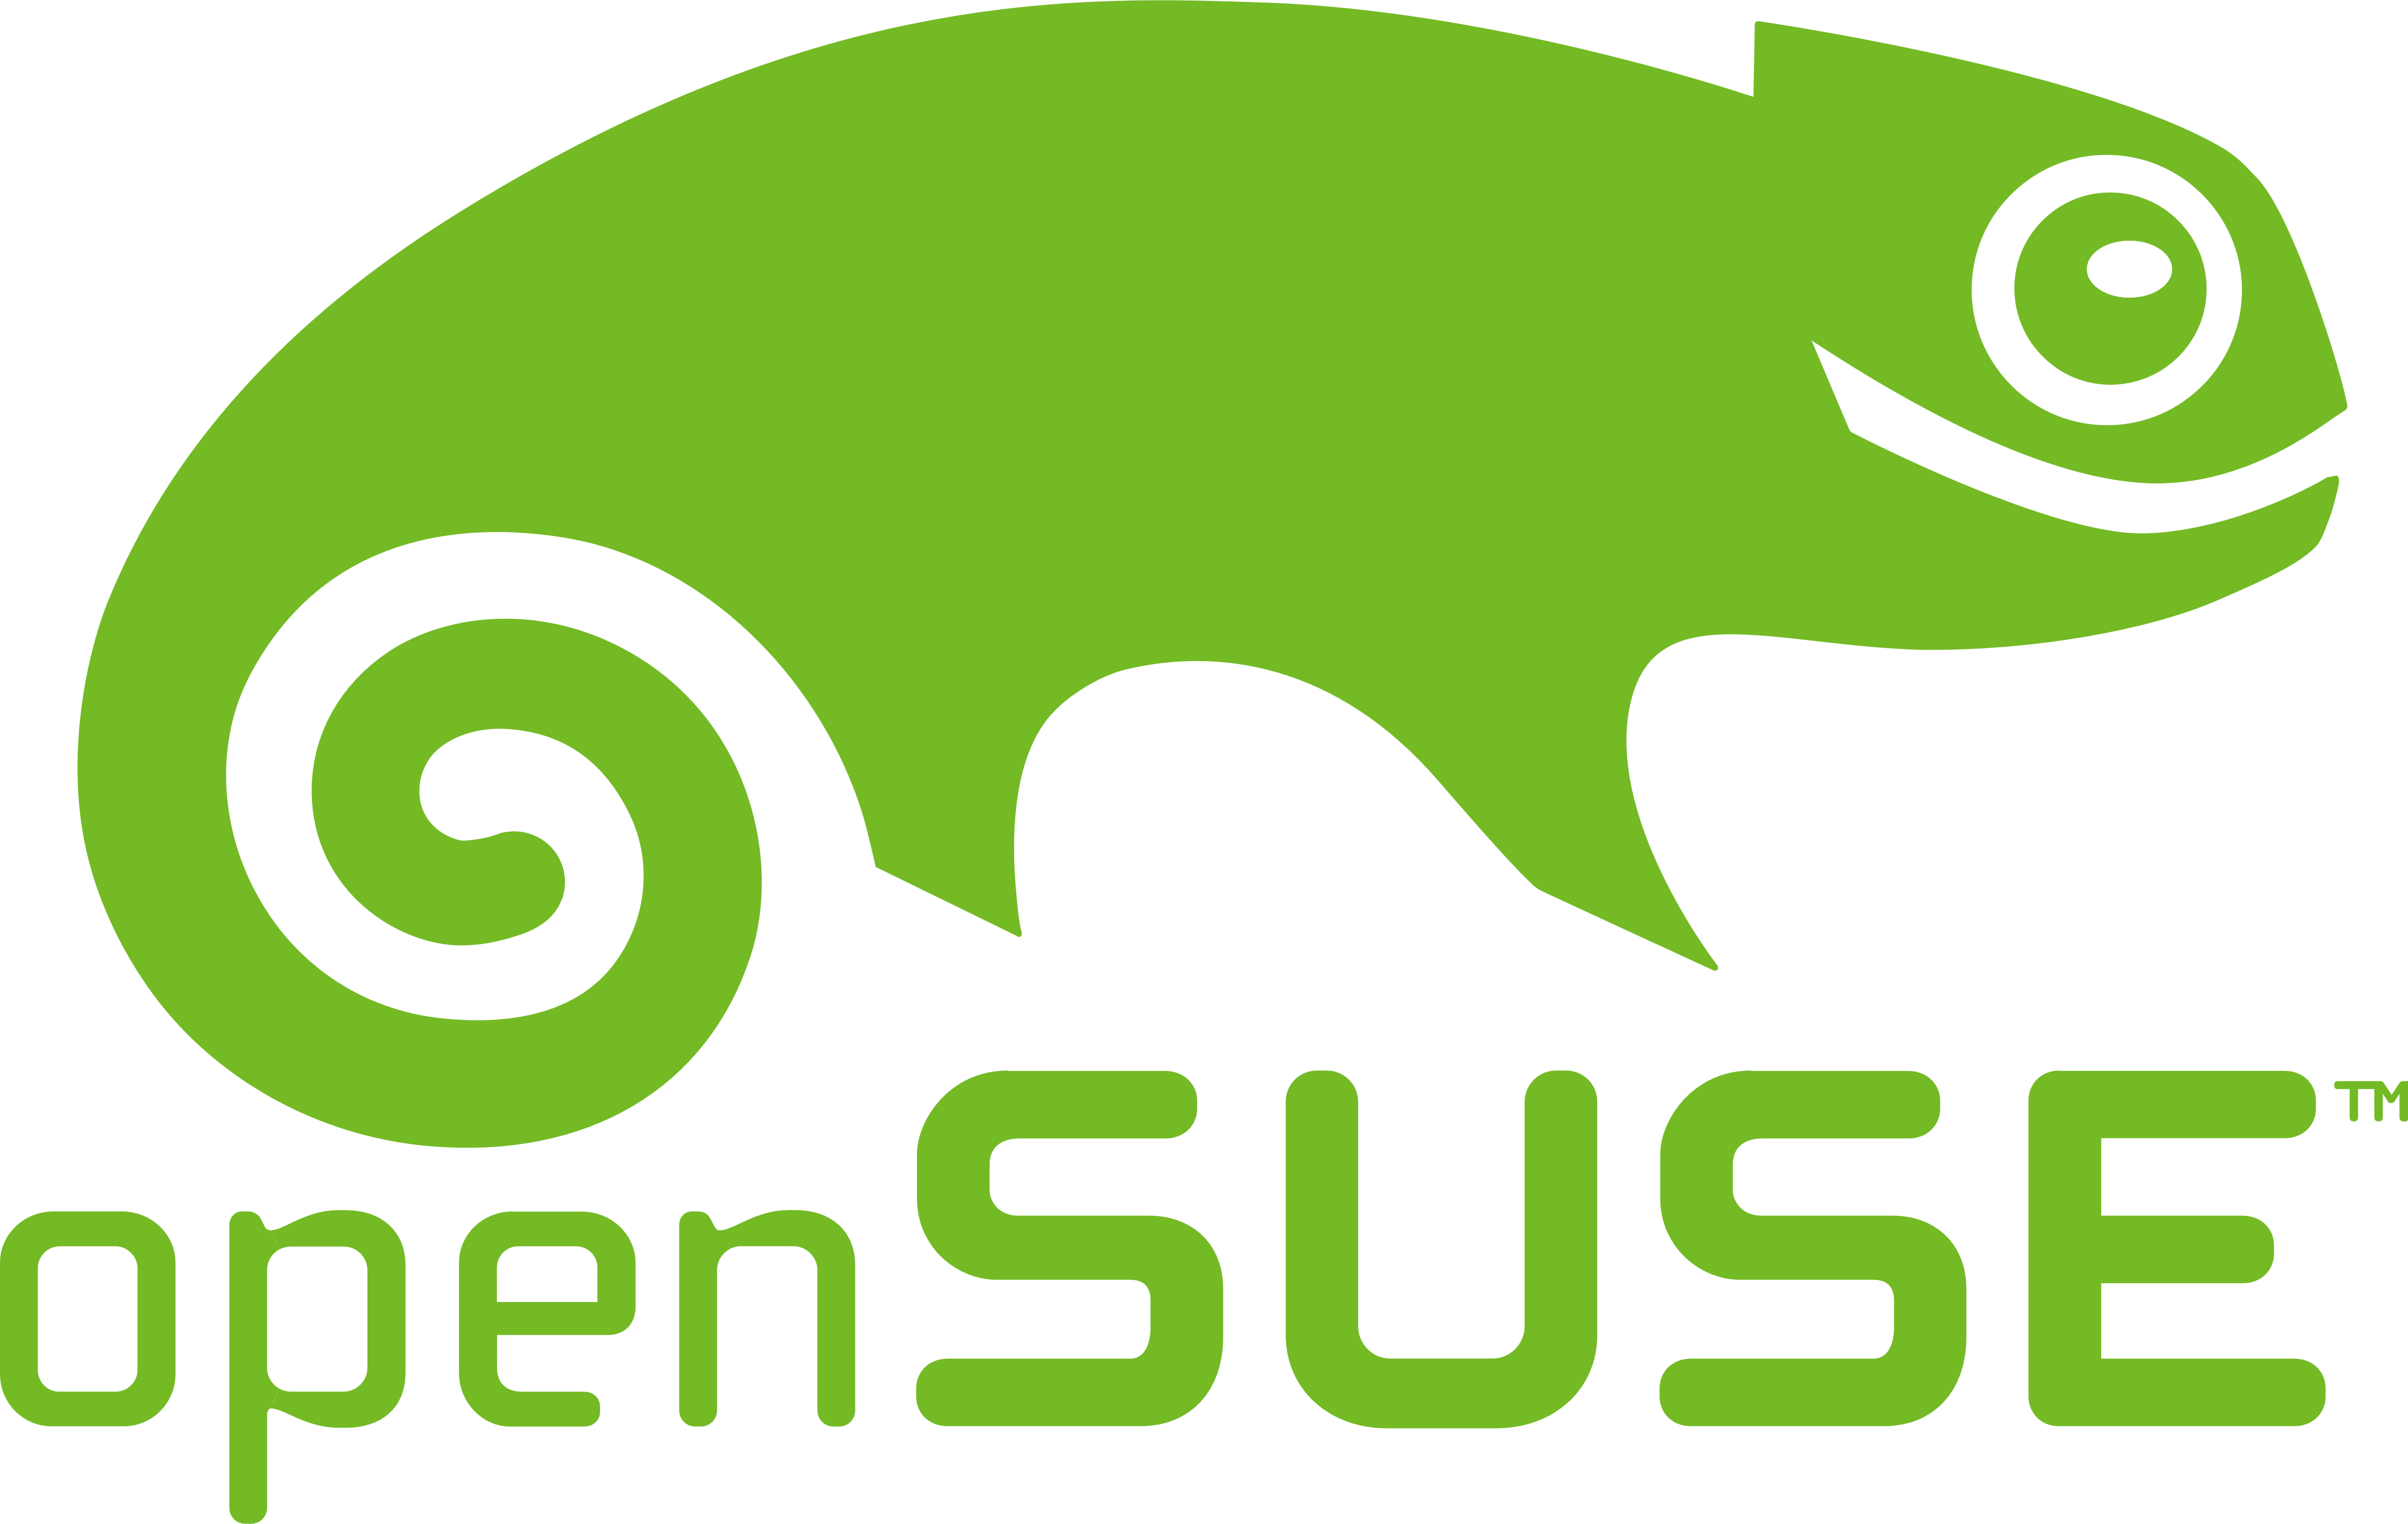 OpenSUSE Logo